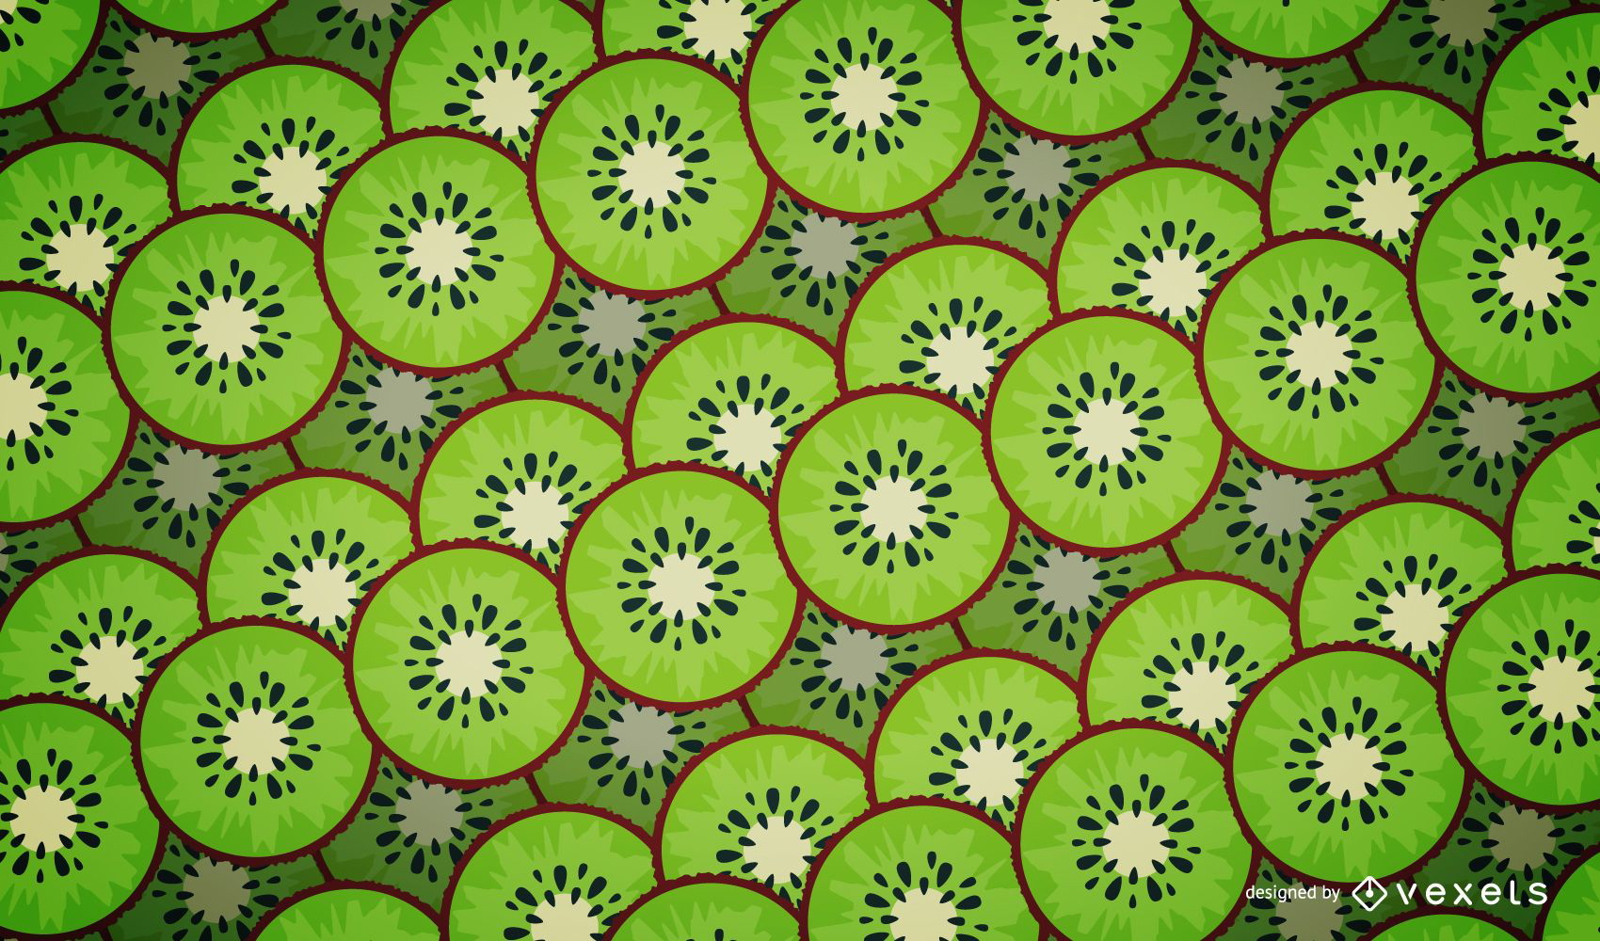 Illustrated kiwi pattern design